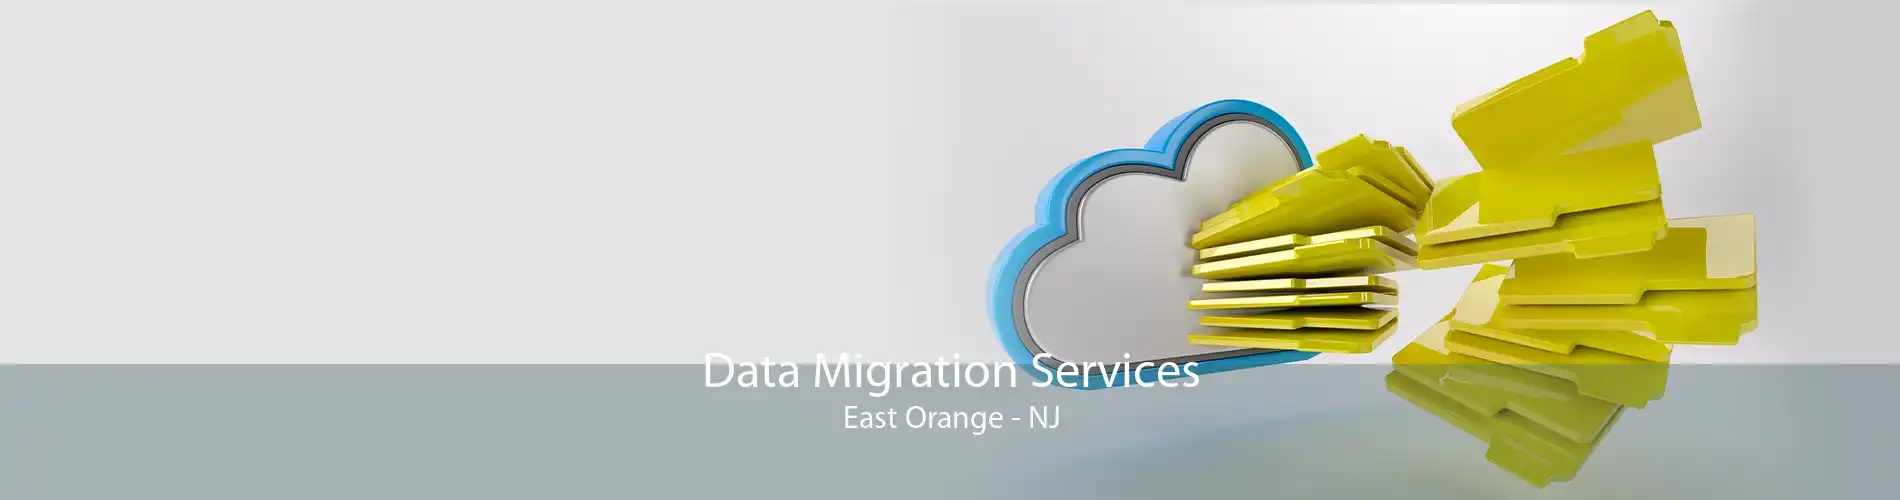 Data Migration Services East Orange - NJ